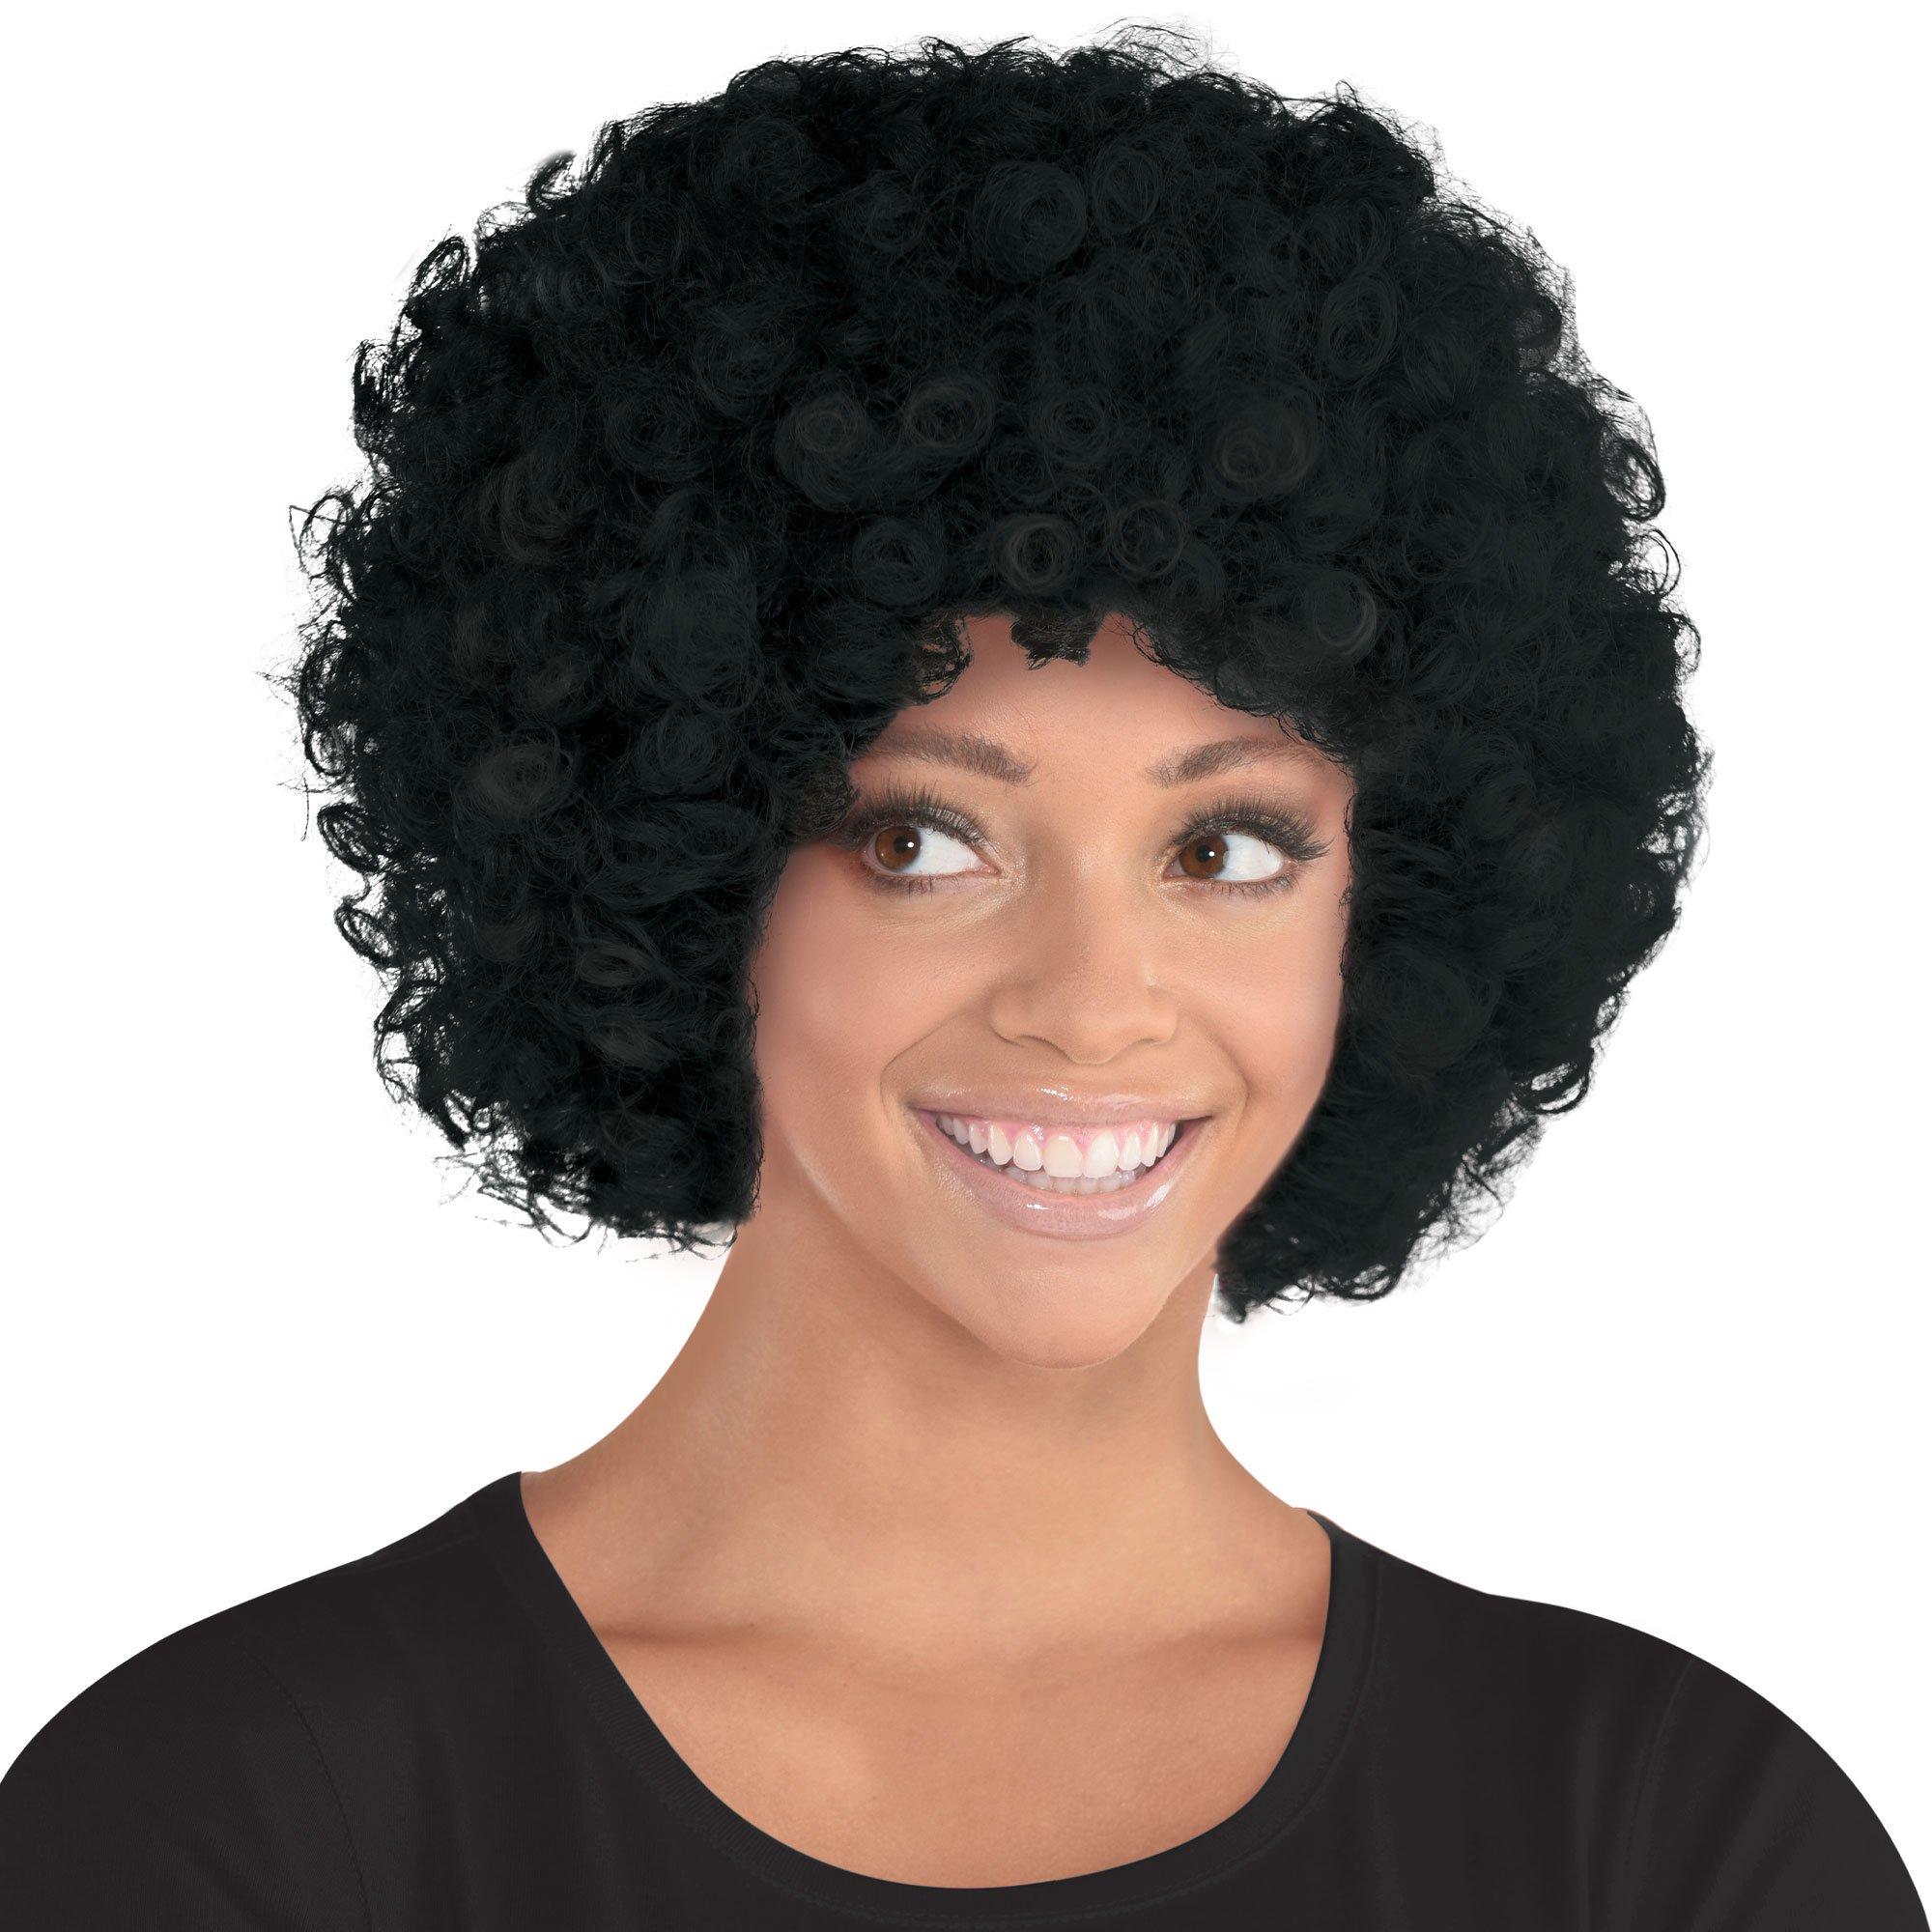 Black Curly Wig